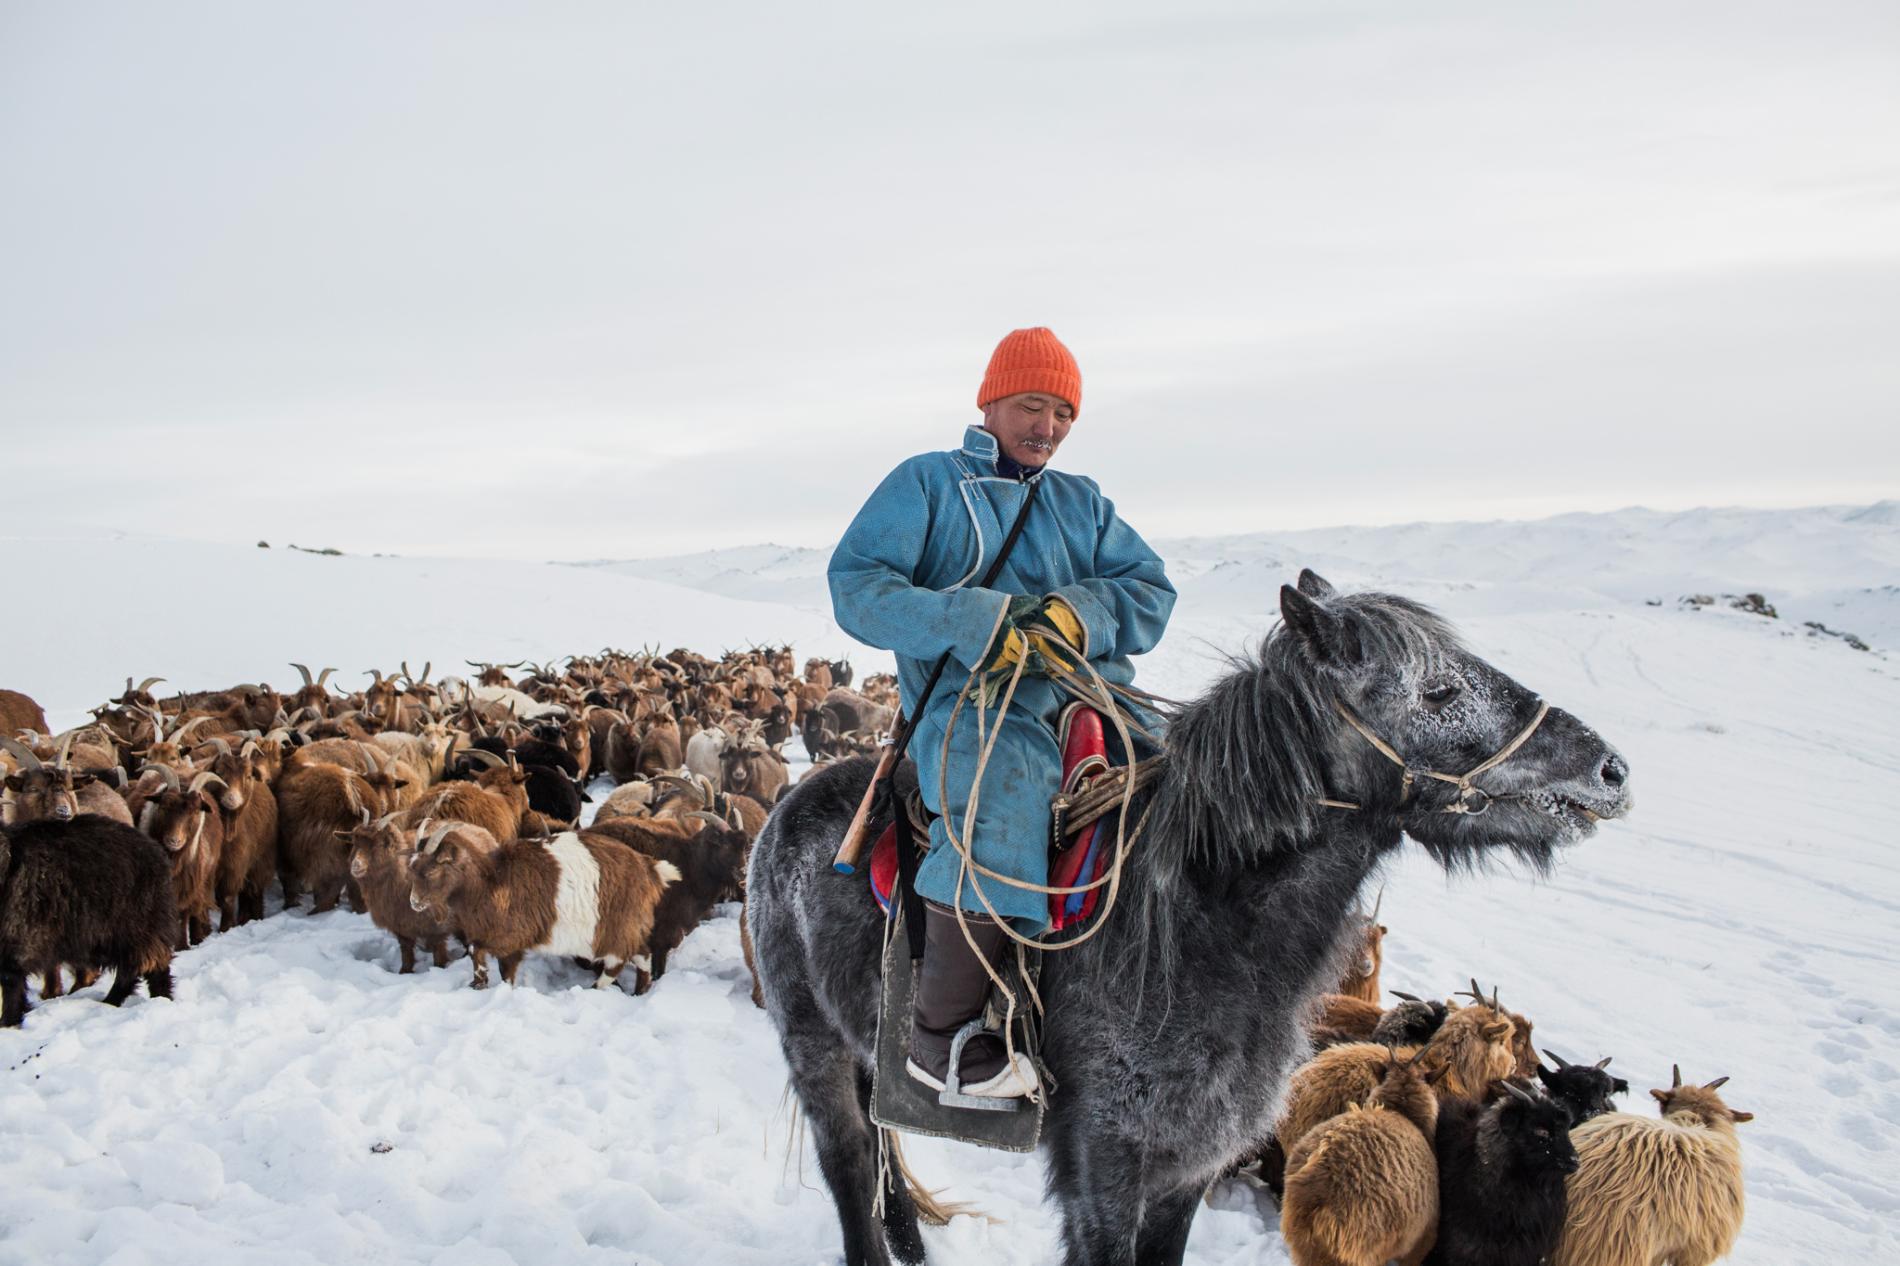 Mongolia’s Indigenous sheep breeds